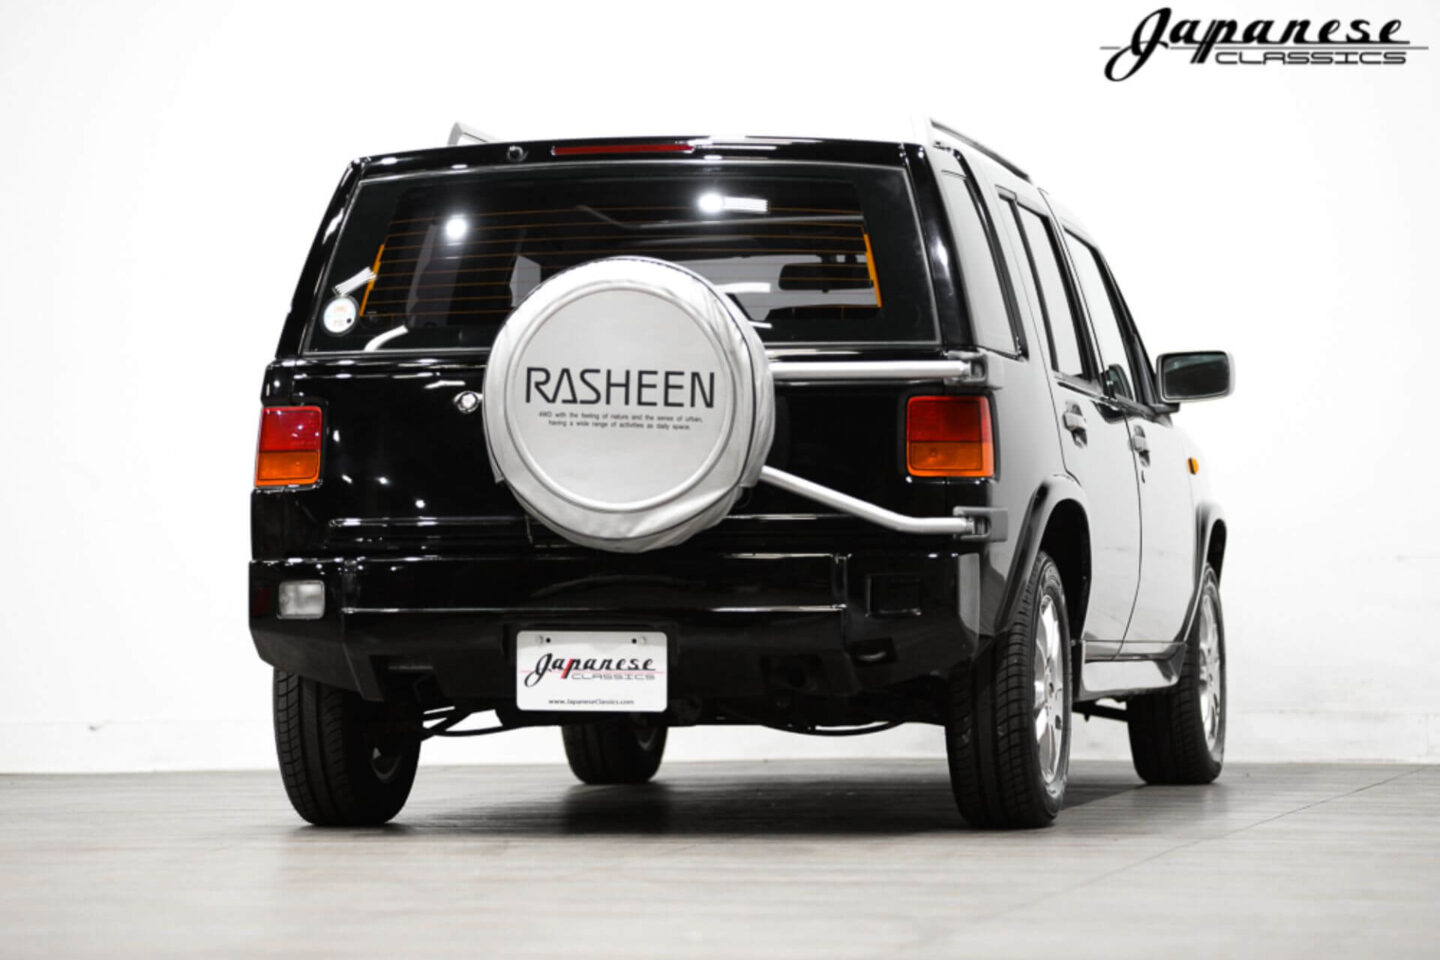 Nissan Rasheen